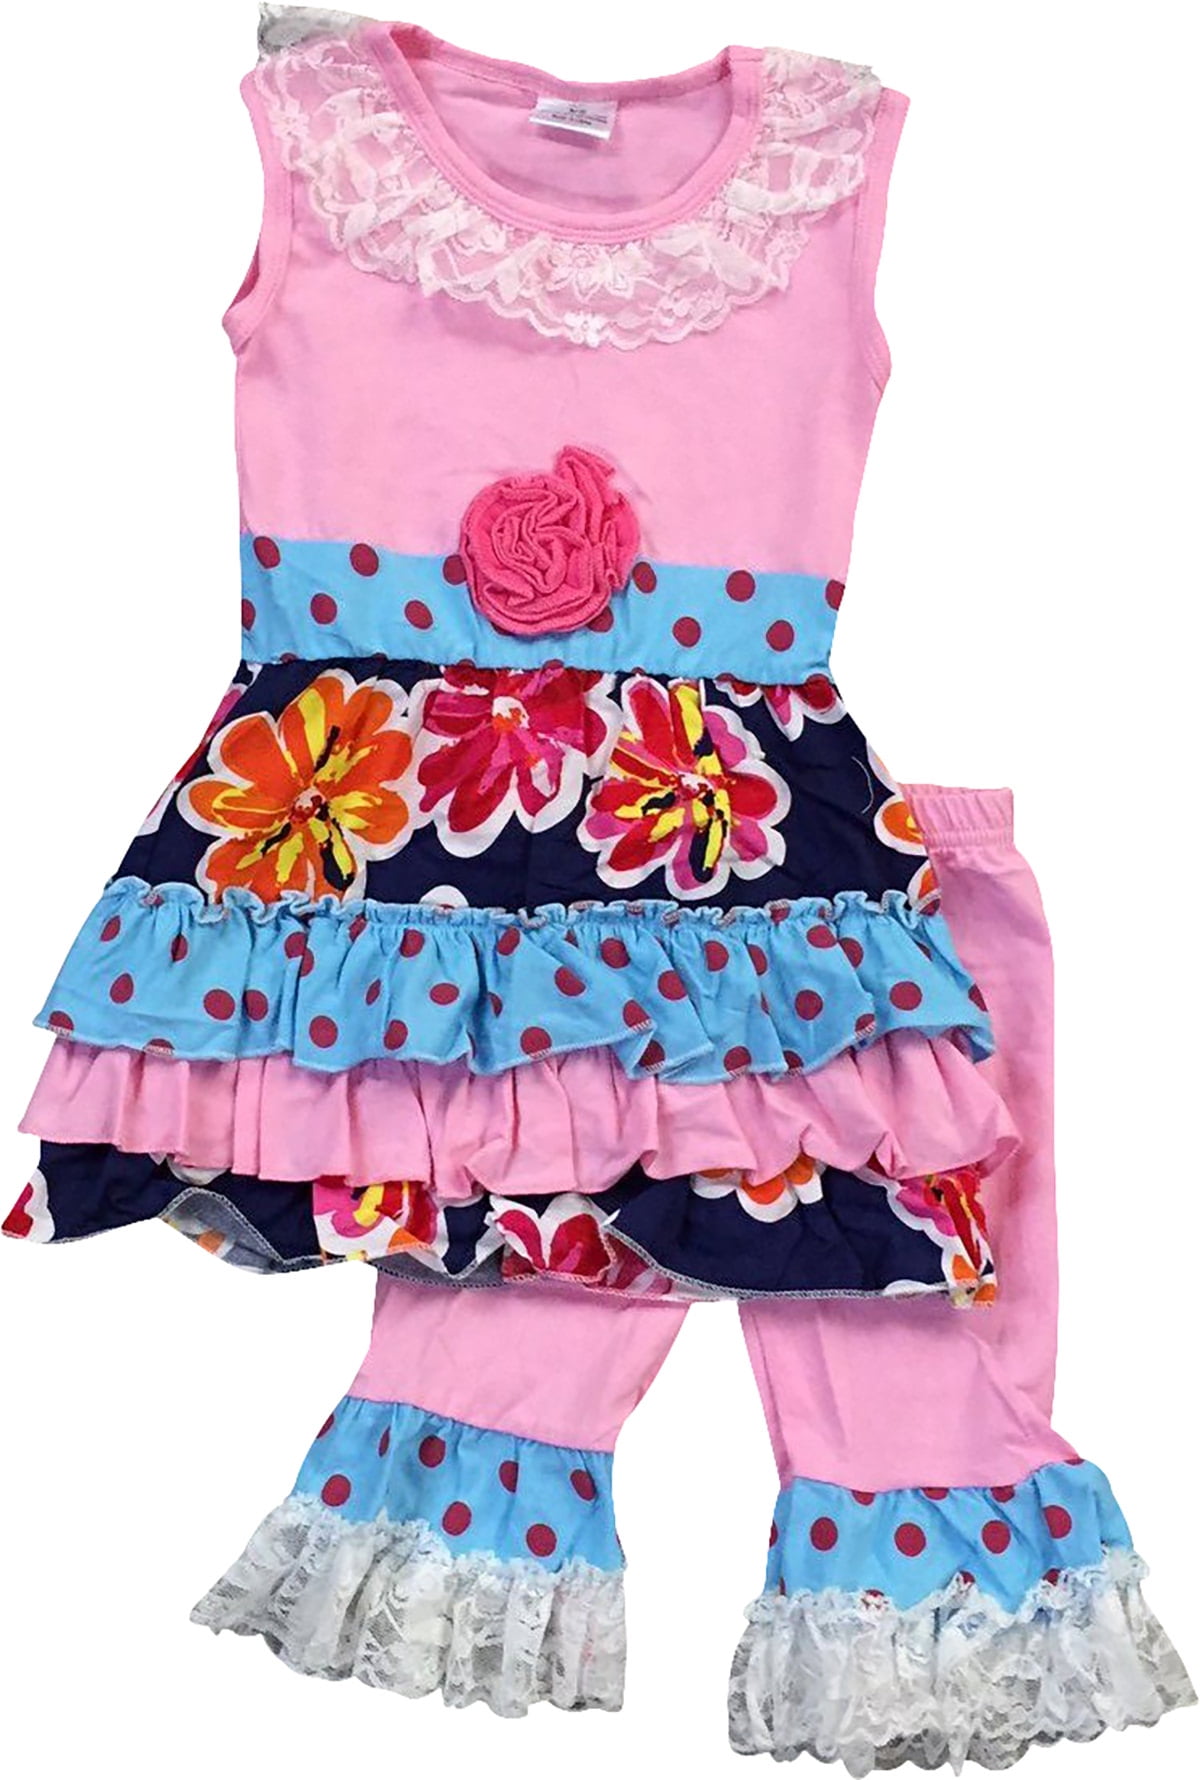 Details about   Nannette Girls Summer Pink Floral Dress Size 3T 4T Tiered Sundress 